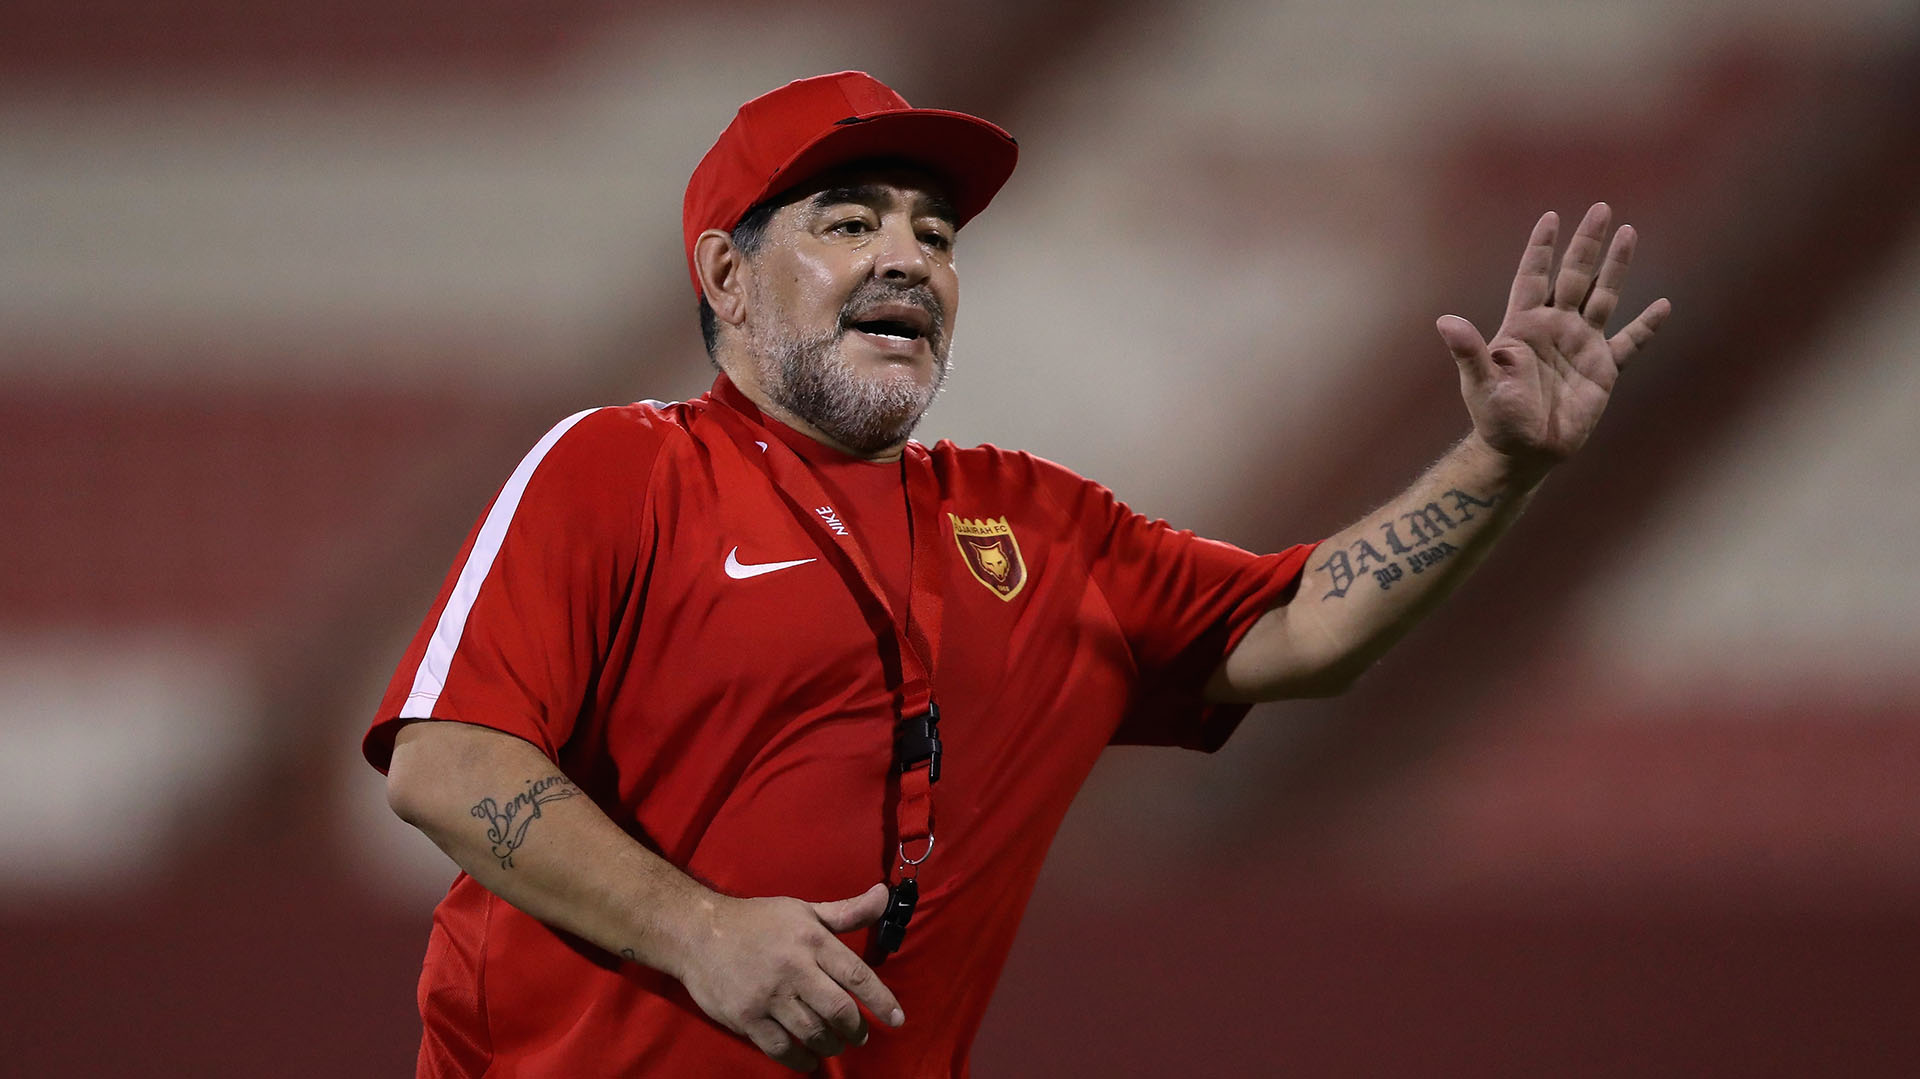 "Dalma" en el brazo izquierdo de Diego Maradona